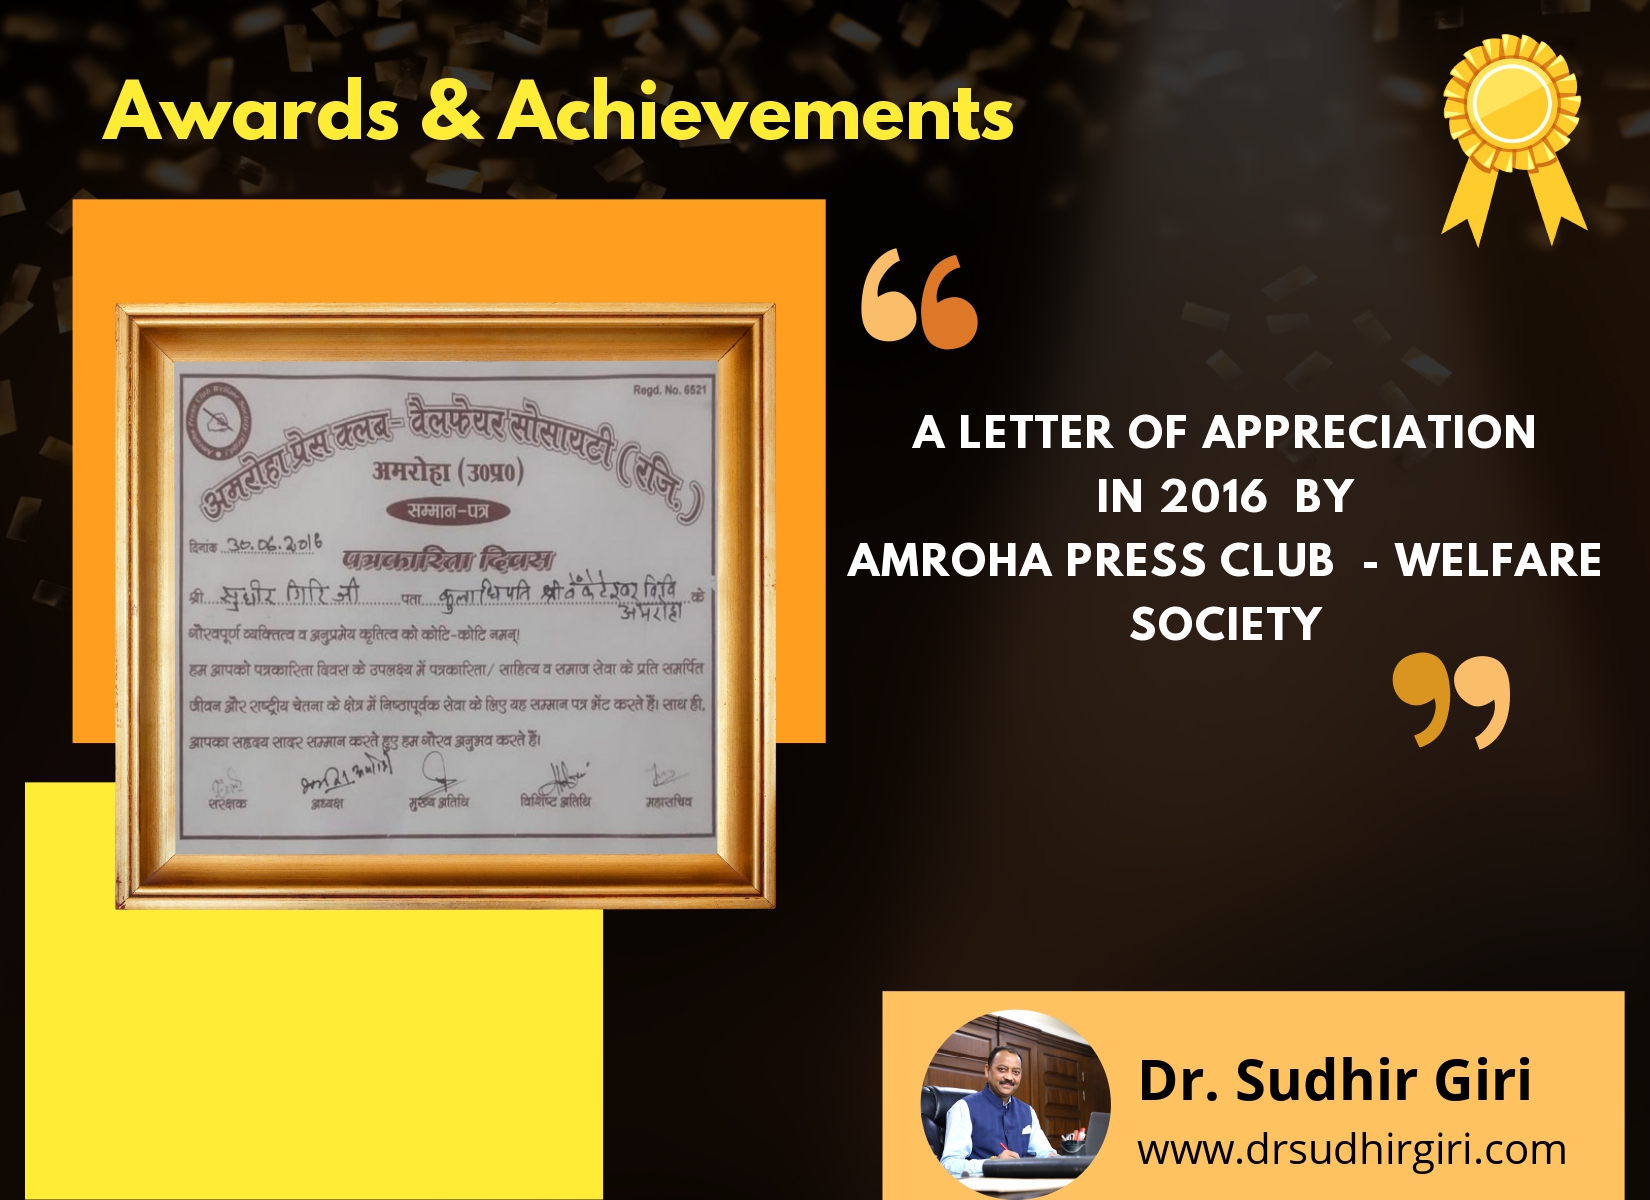 Dr Sudhir Giri - A letter of appreciation in 2016 by Amroha Press Club - WELFARE SOCIETY